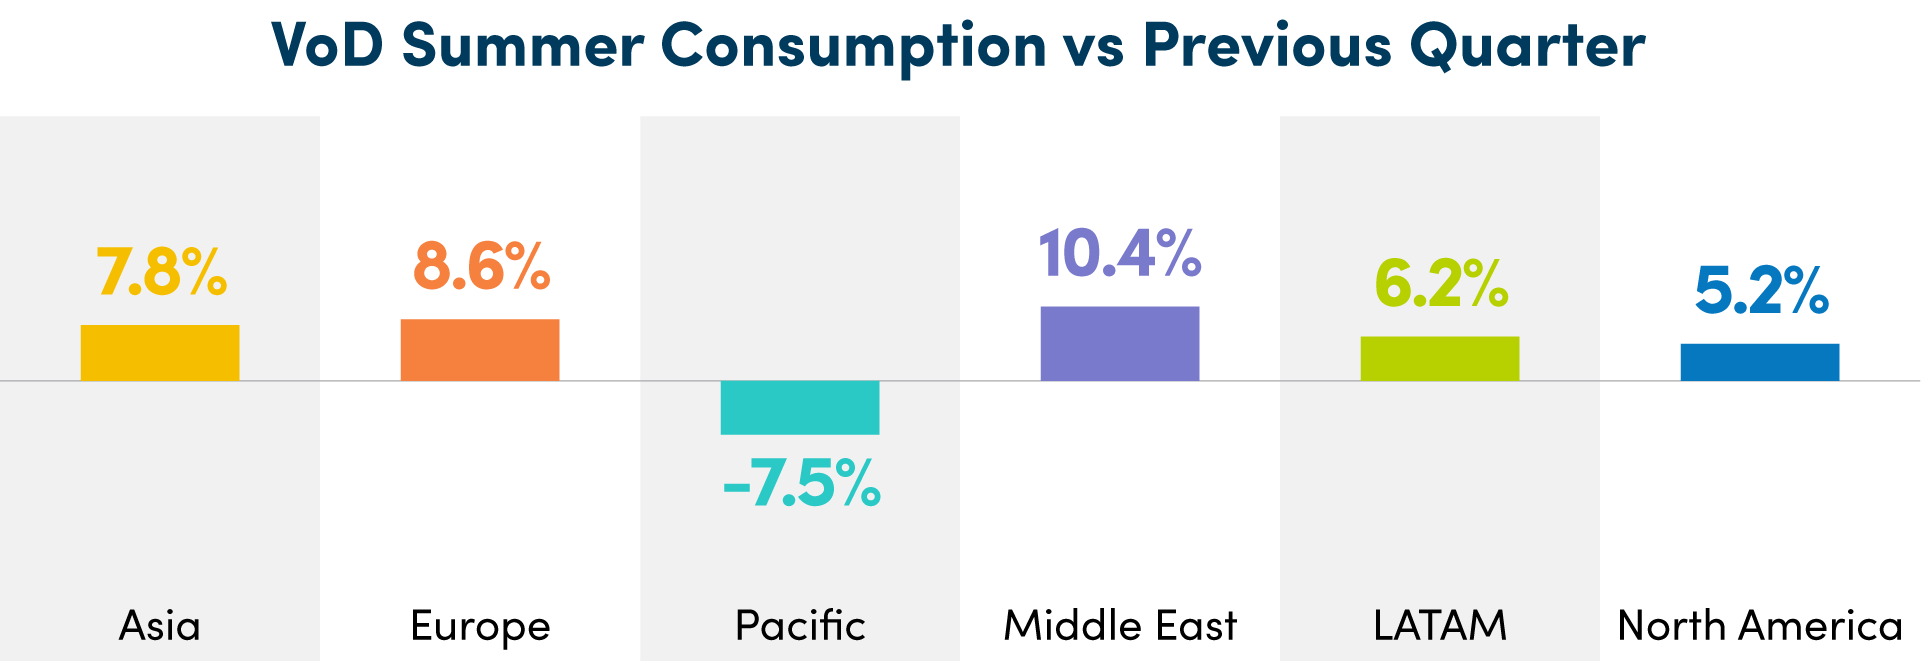 VOD 2021 summer consumption vs previous quarter